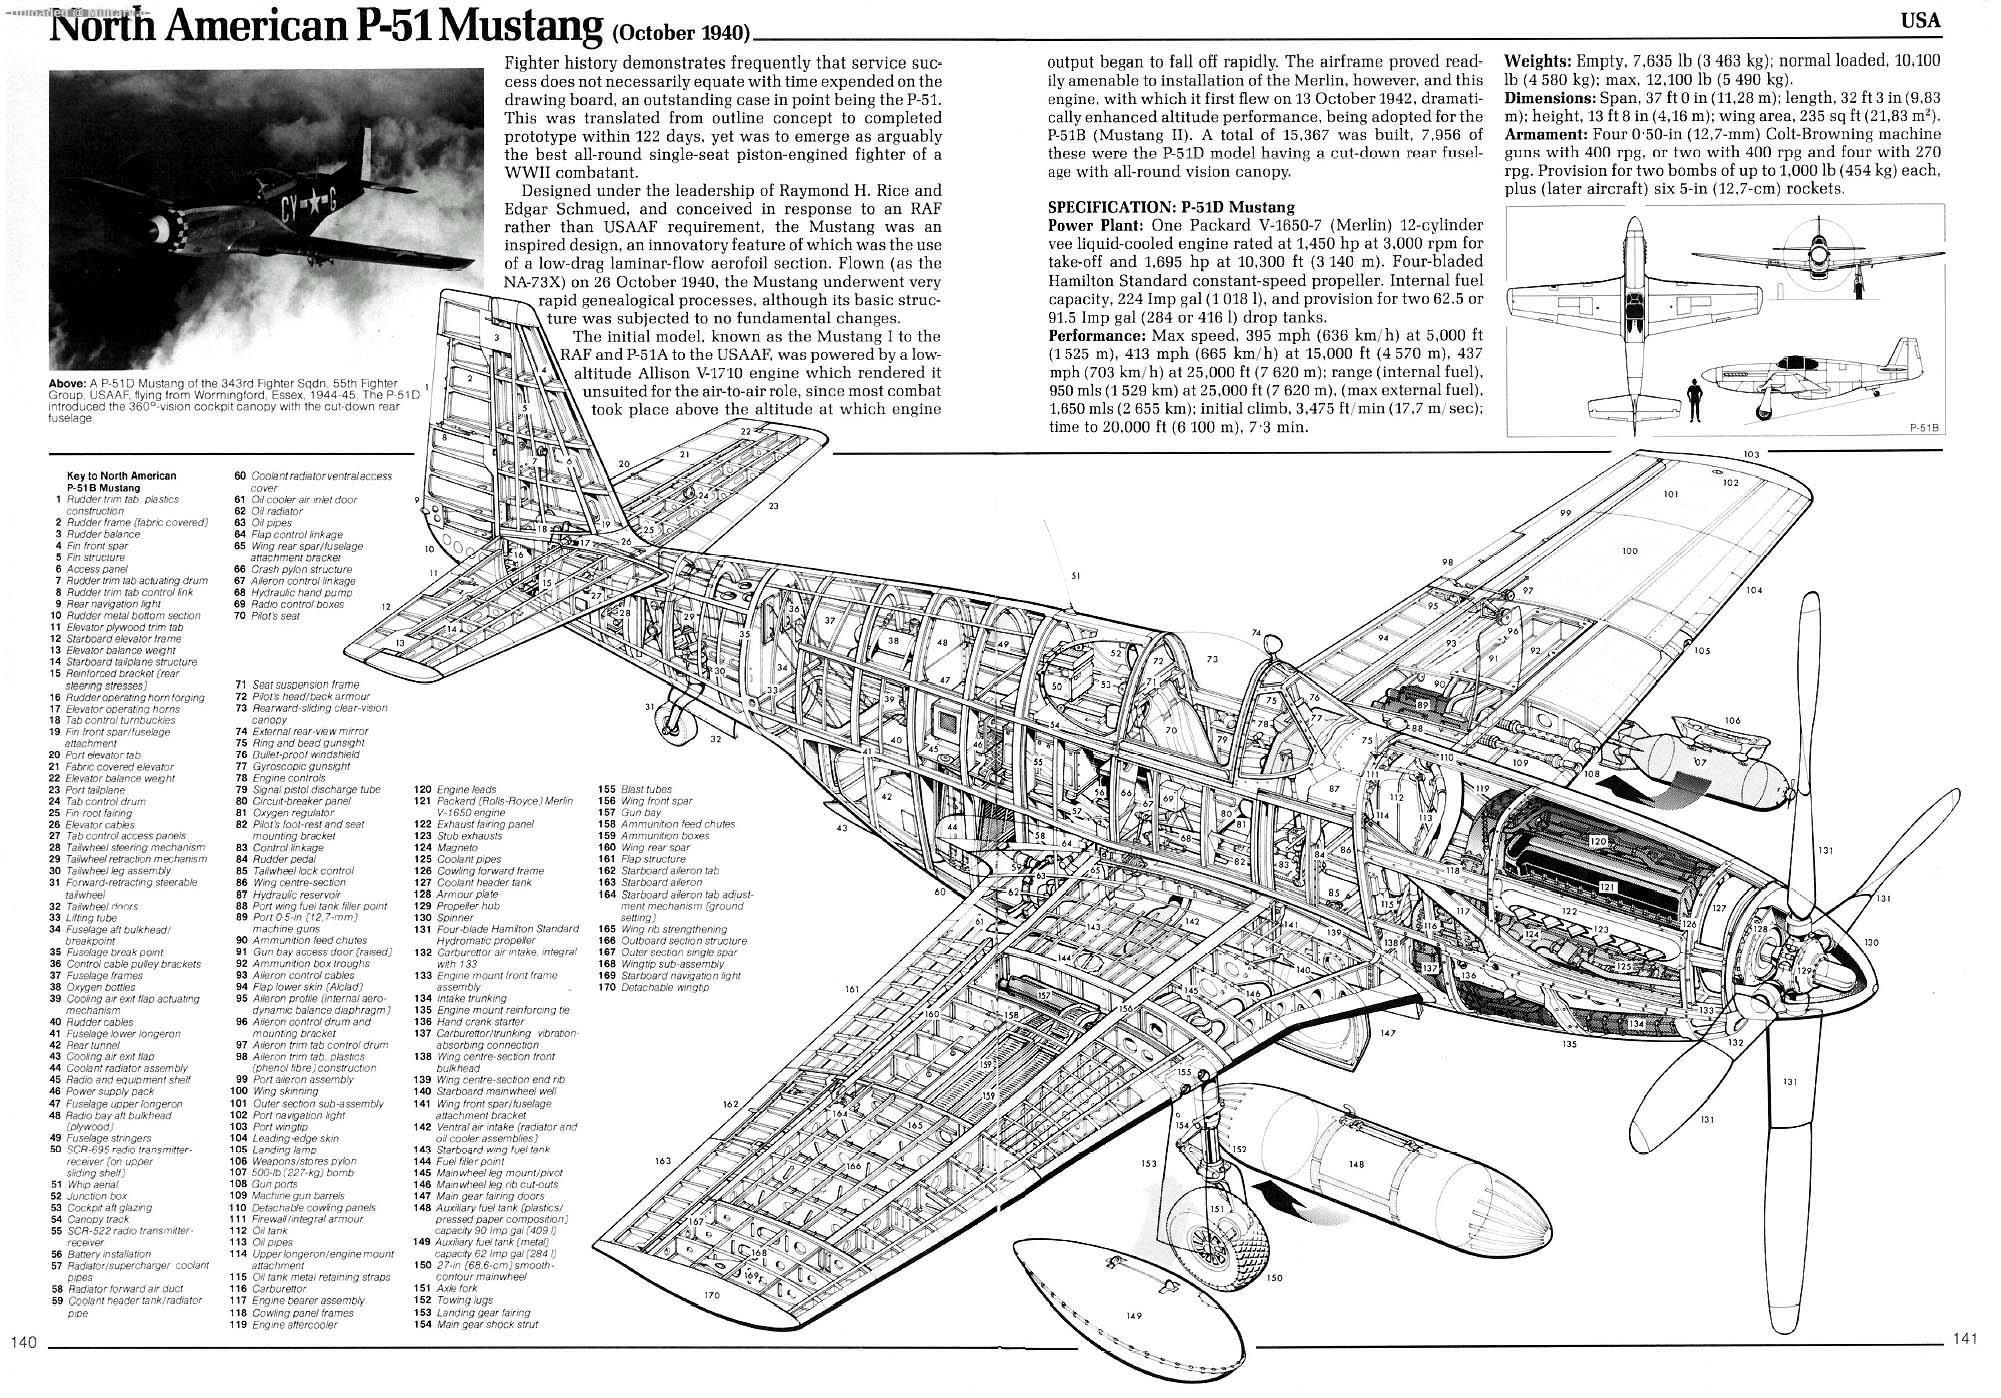 North_American_P-51_Mustang.jpg